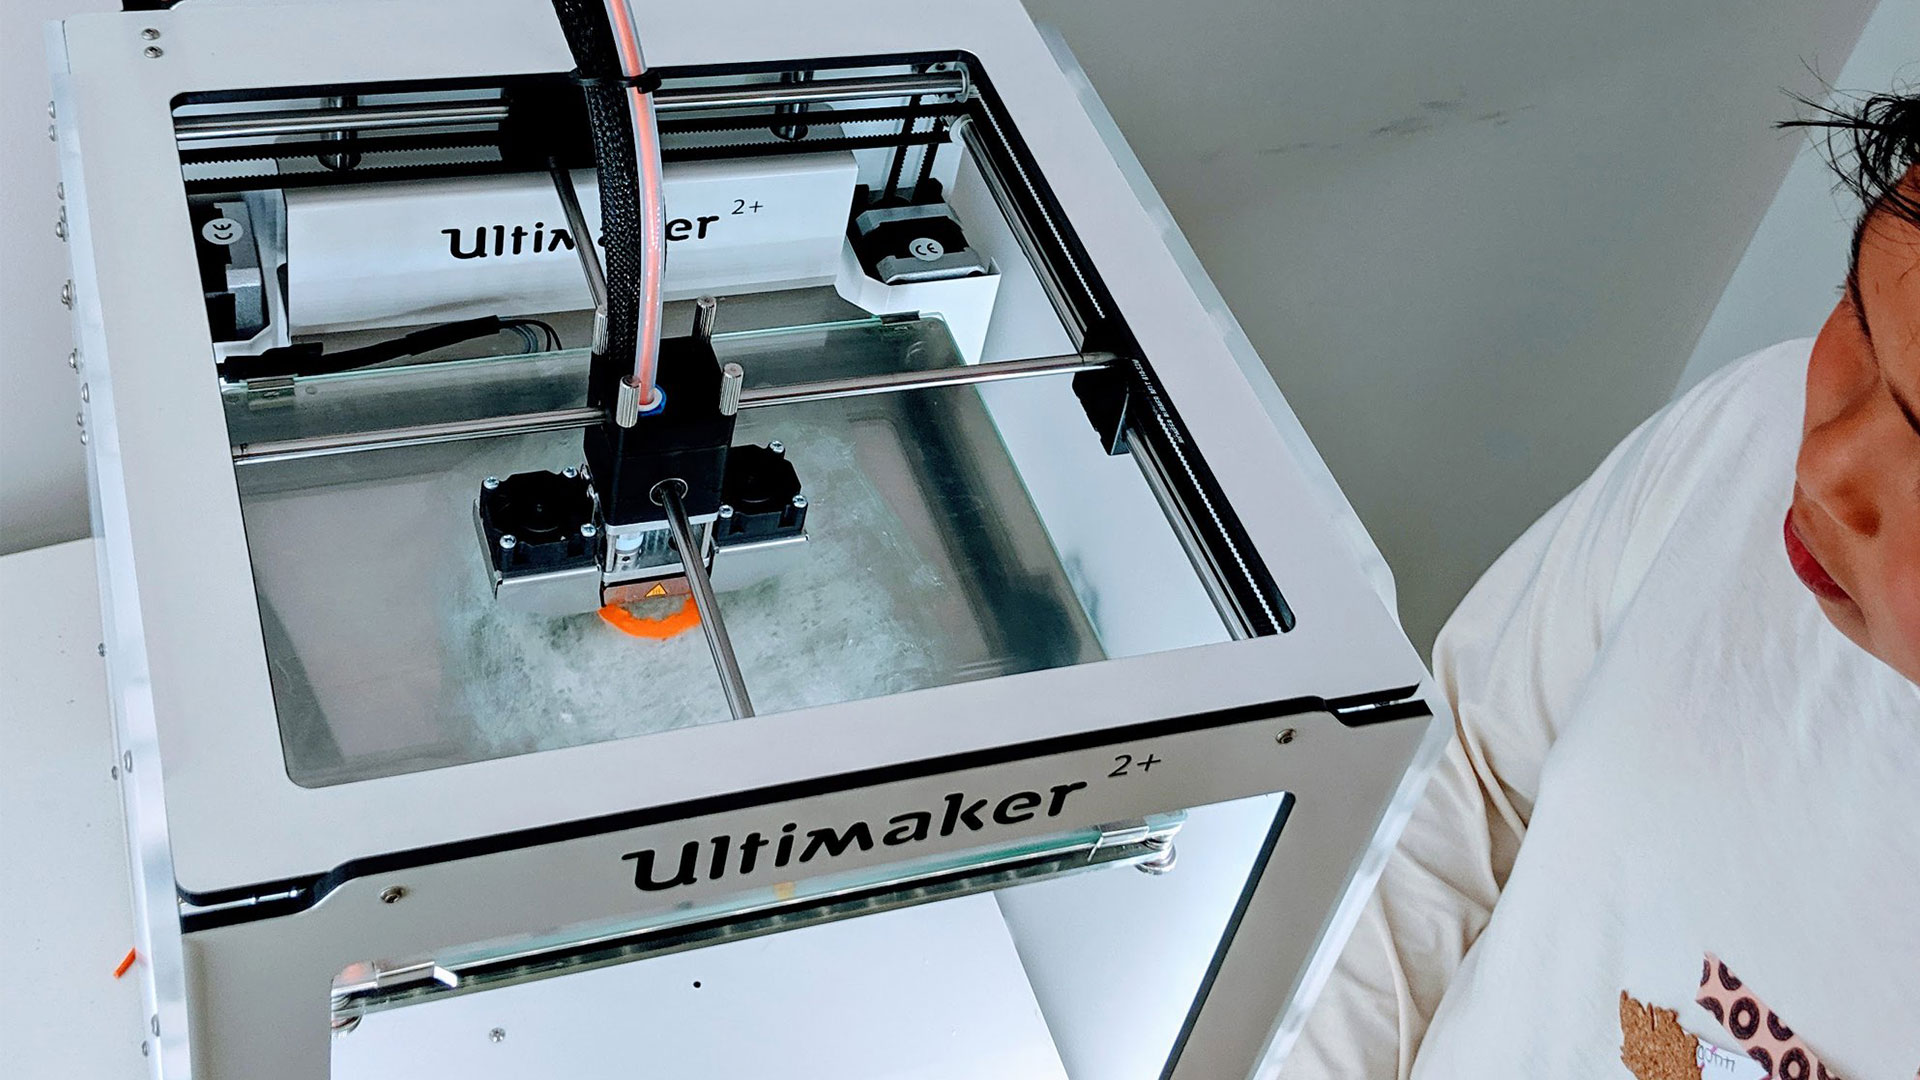 A 3D printer printing an item